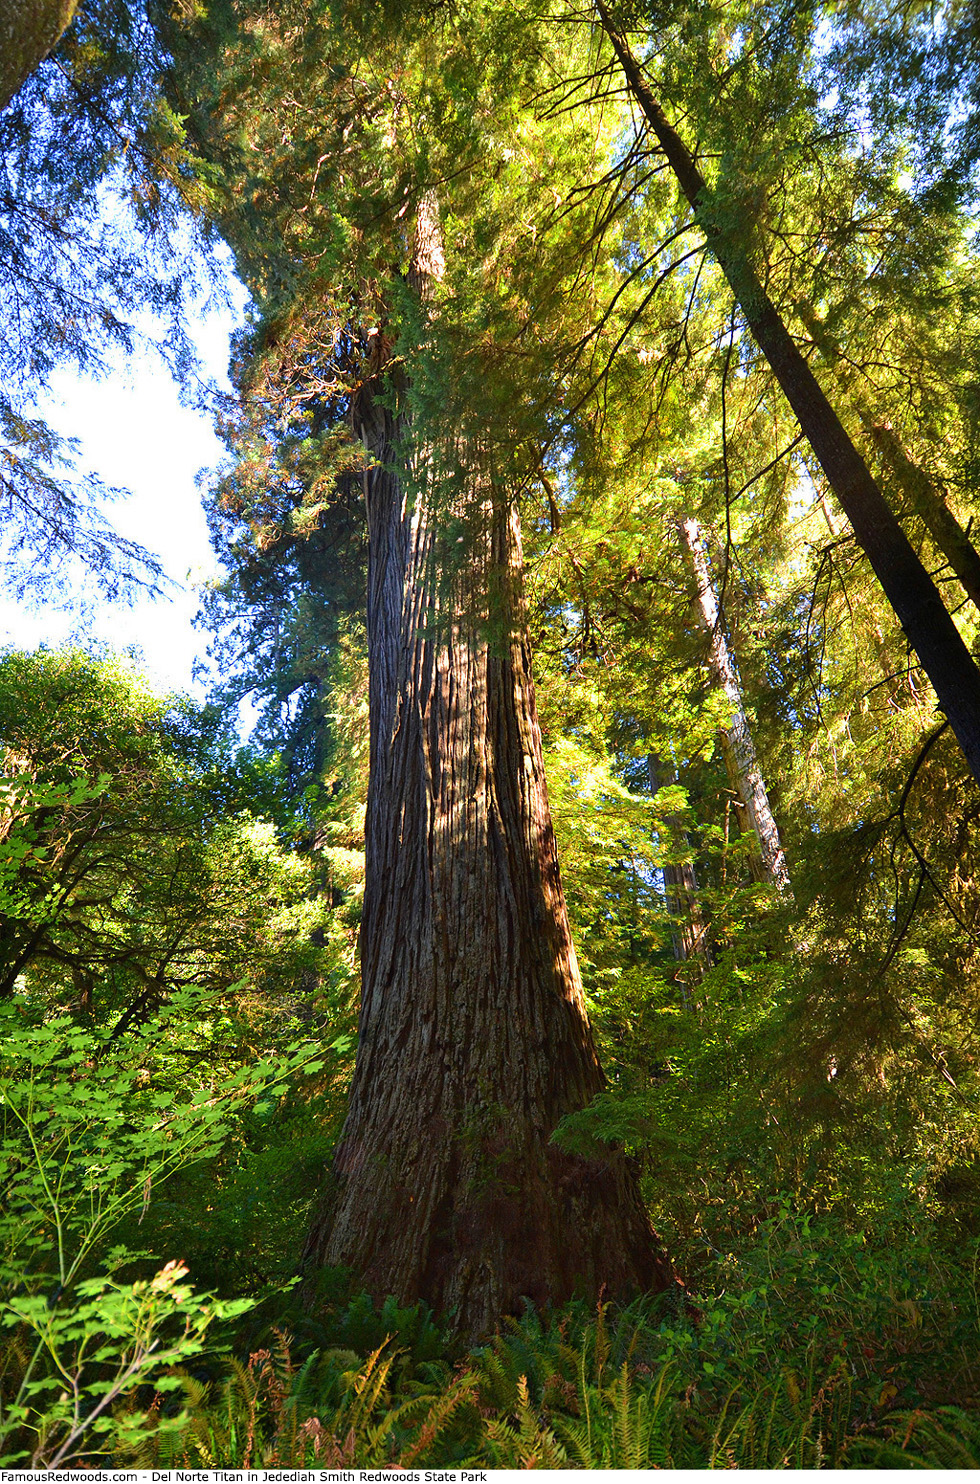 Jedediah Smith Redwoods State Park - Del Norte Titan Tree